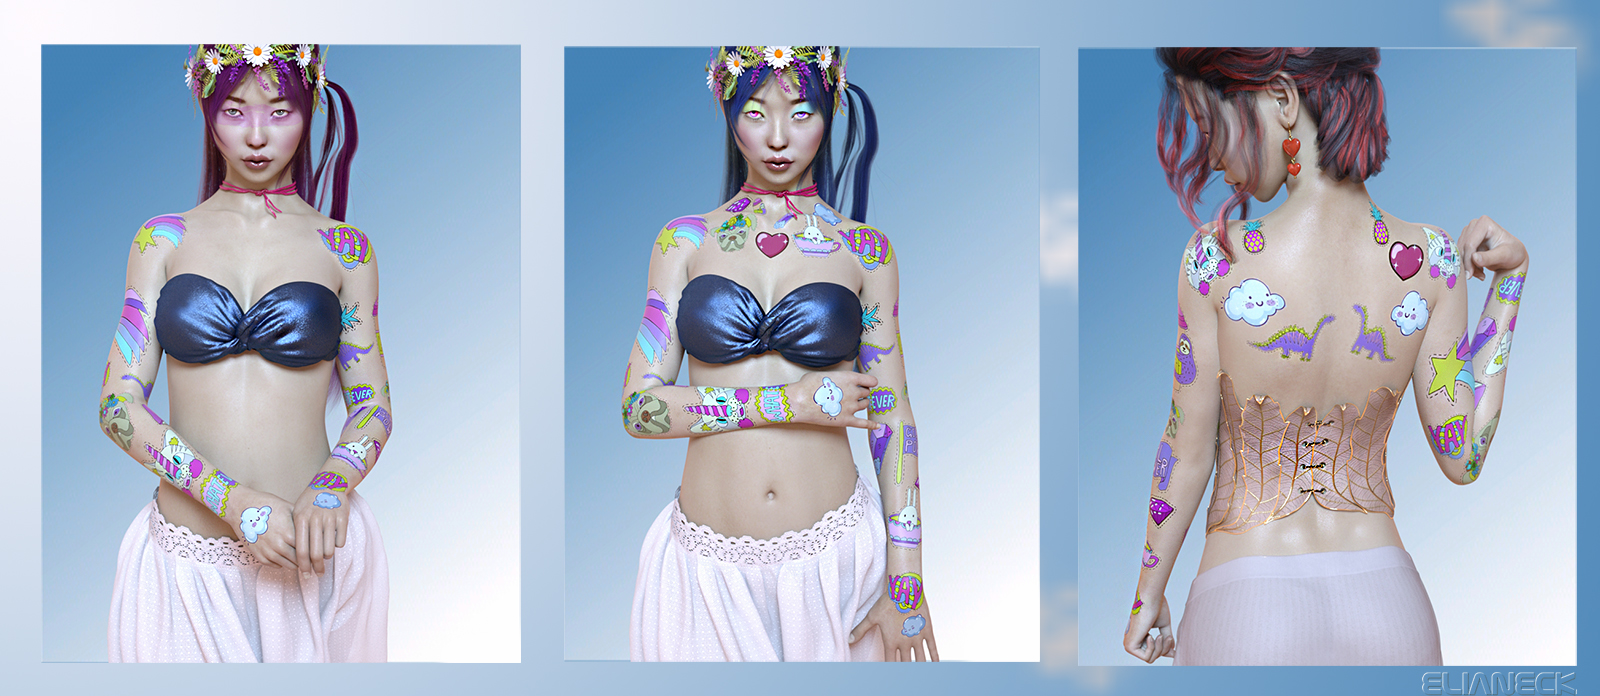 Tuti for Genesis 8 Female by: Elianeck, 3D Models by Daz 3D